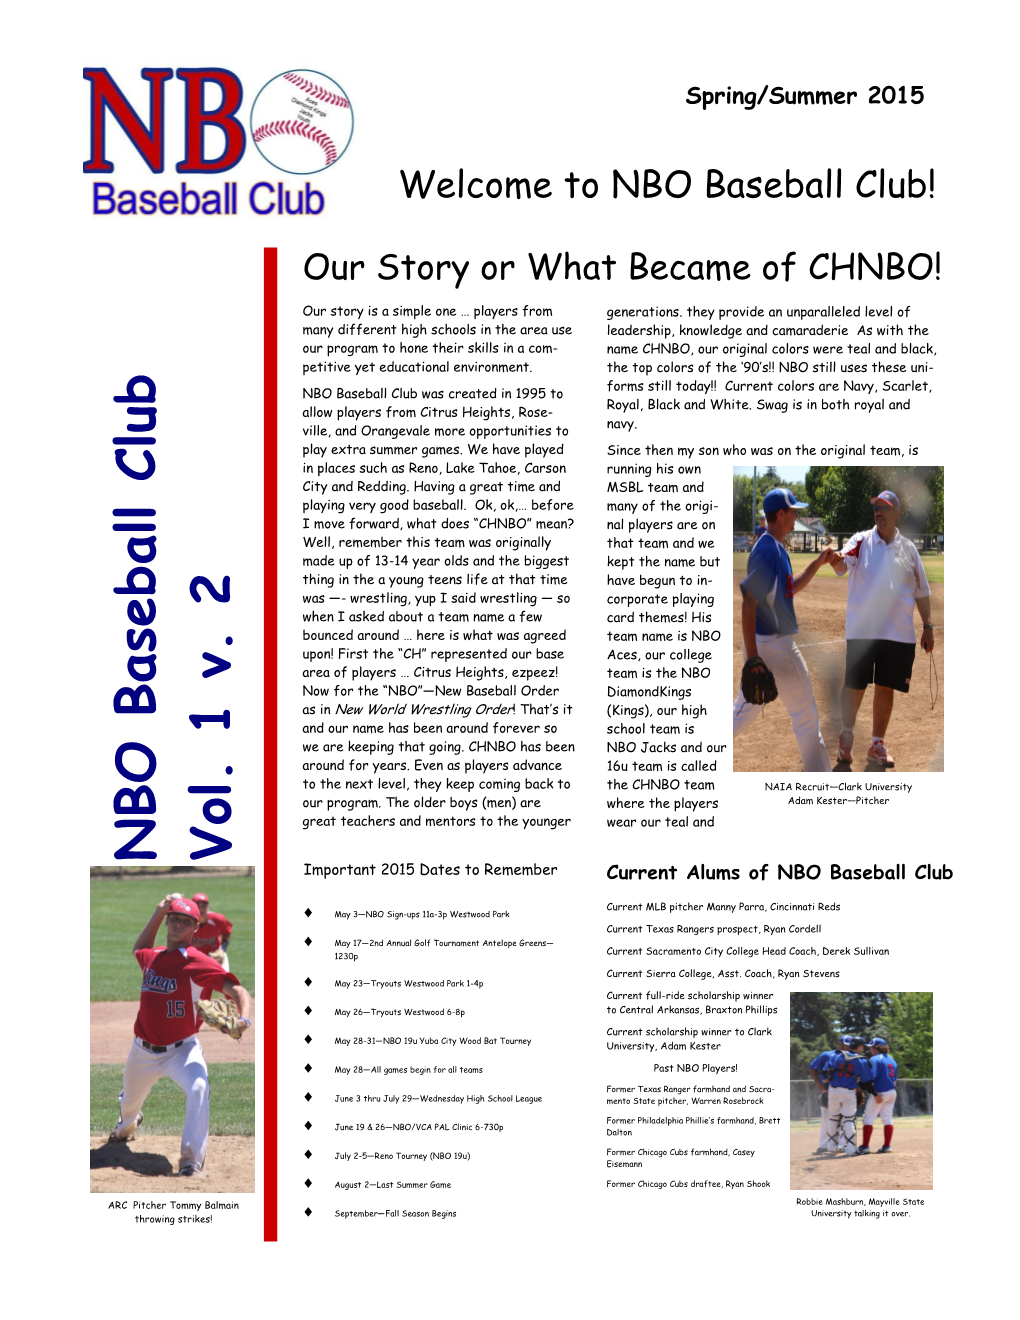 NBO Baseball Club Vol. 1 V. 2